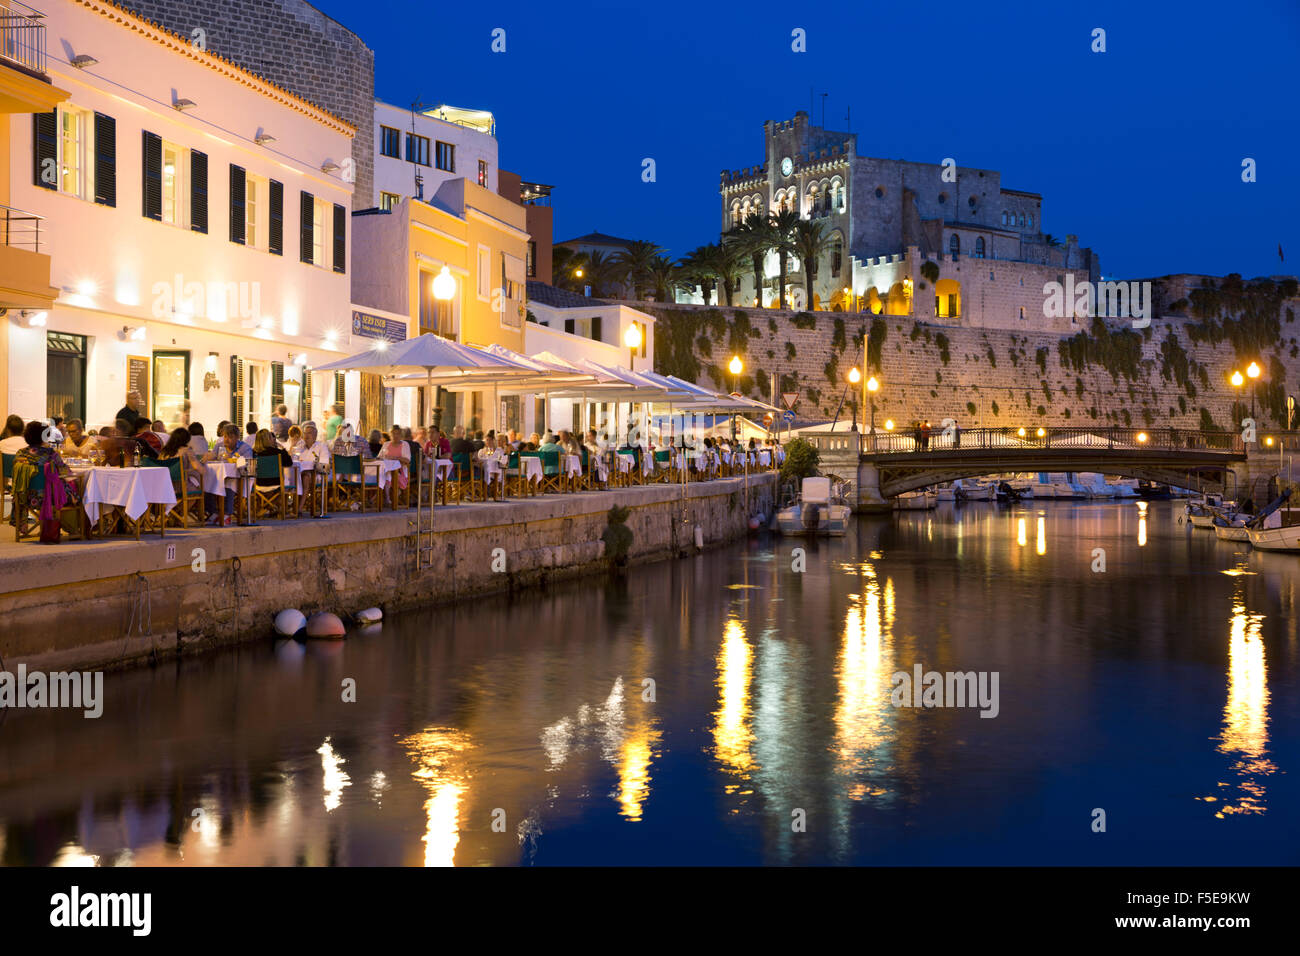 Cafe Balear and Ayuntamiento de Ciutadella at night, Ciutadella, Menorca, Balearic Islands, Spain, Mediterranean, Europe Stock Photo